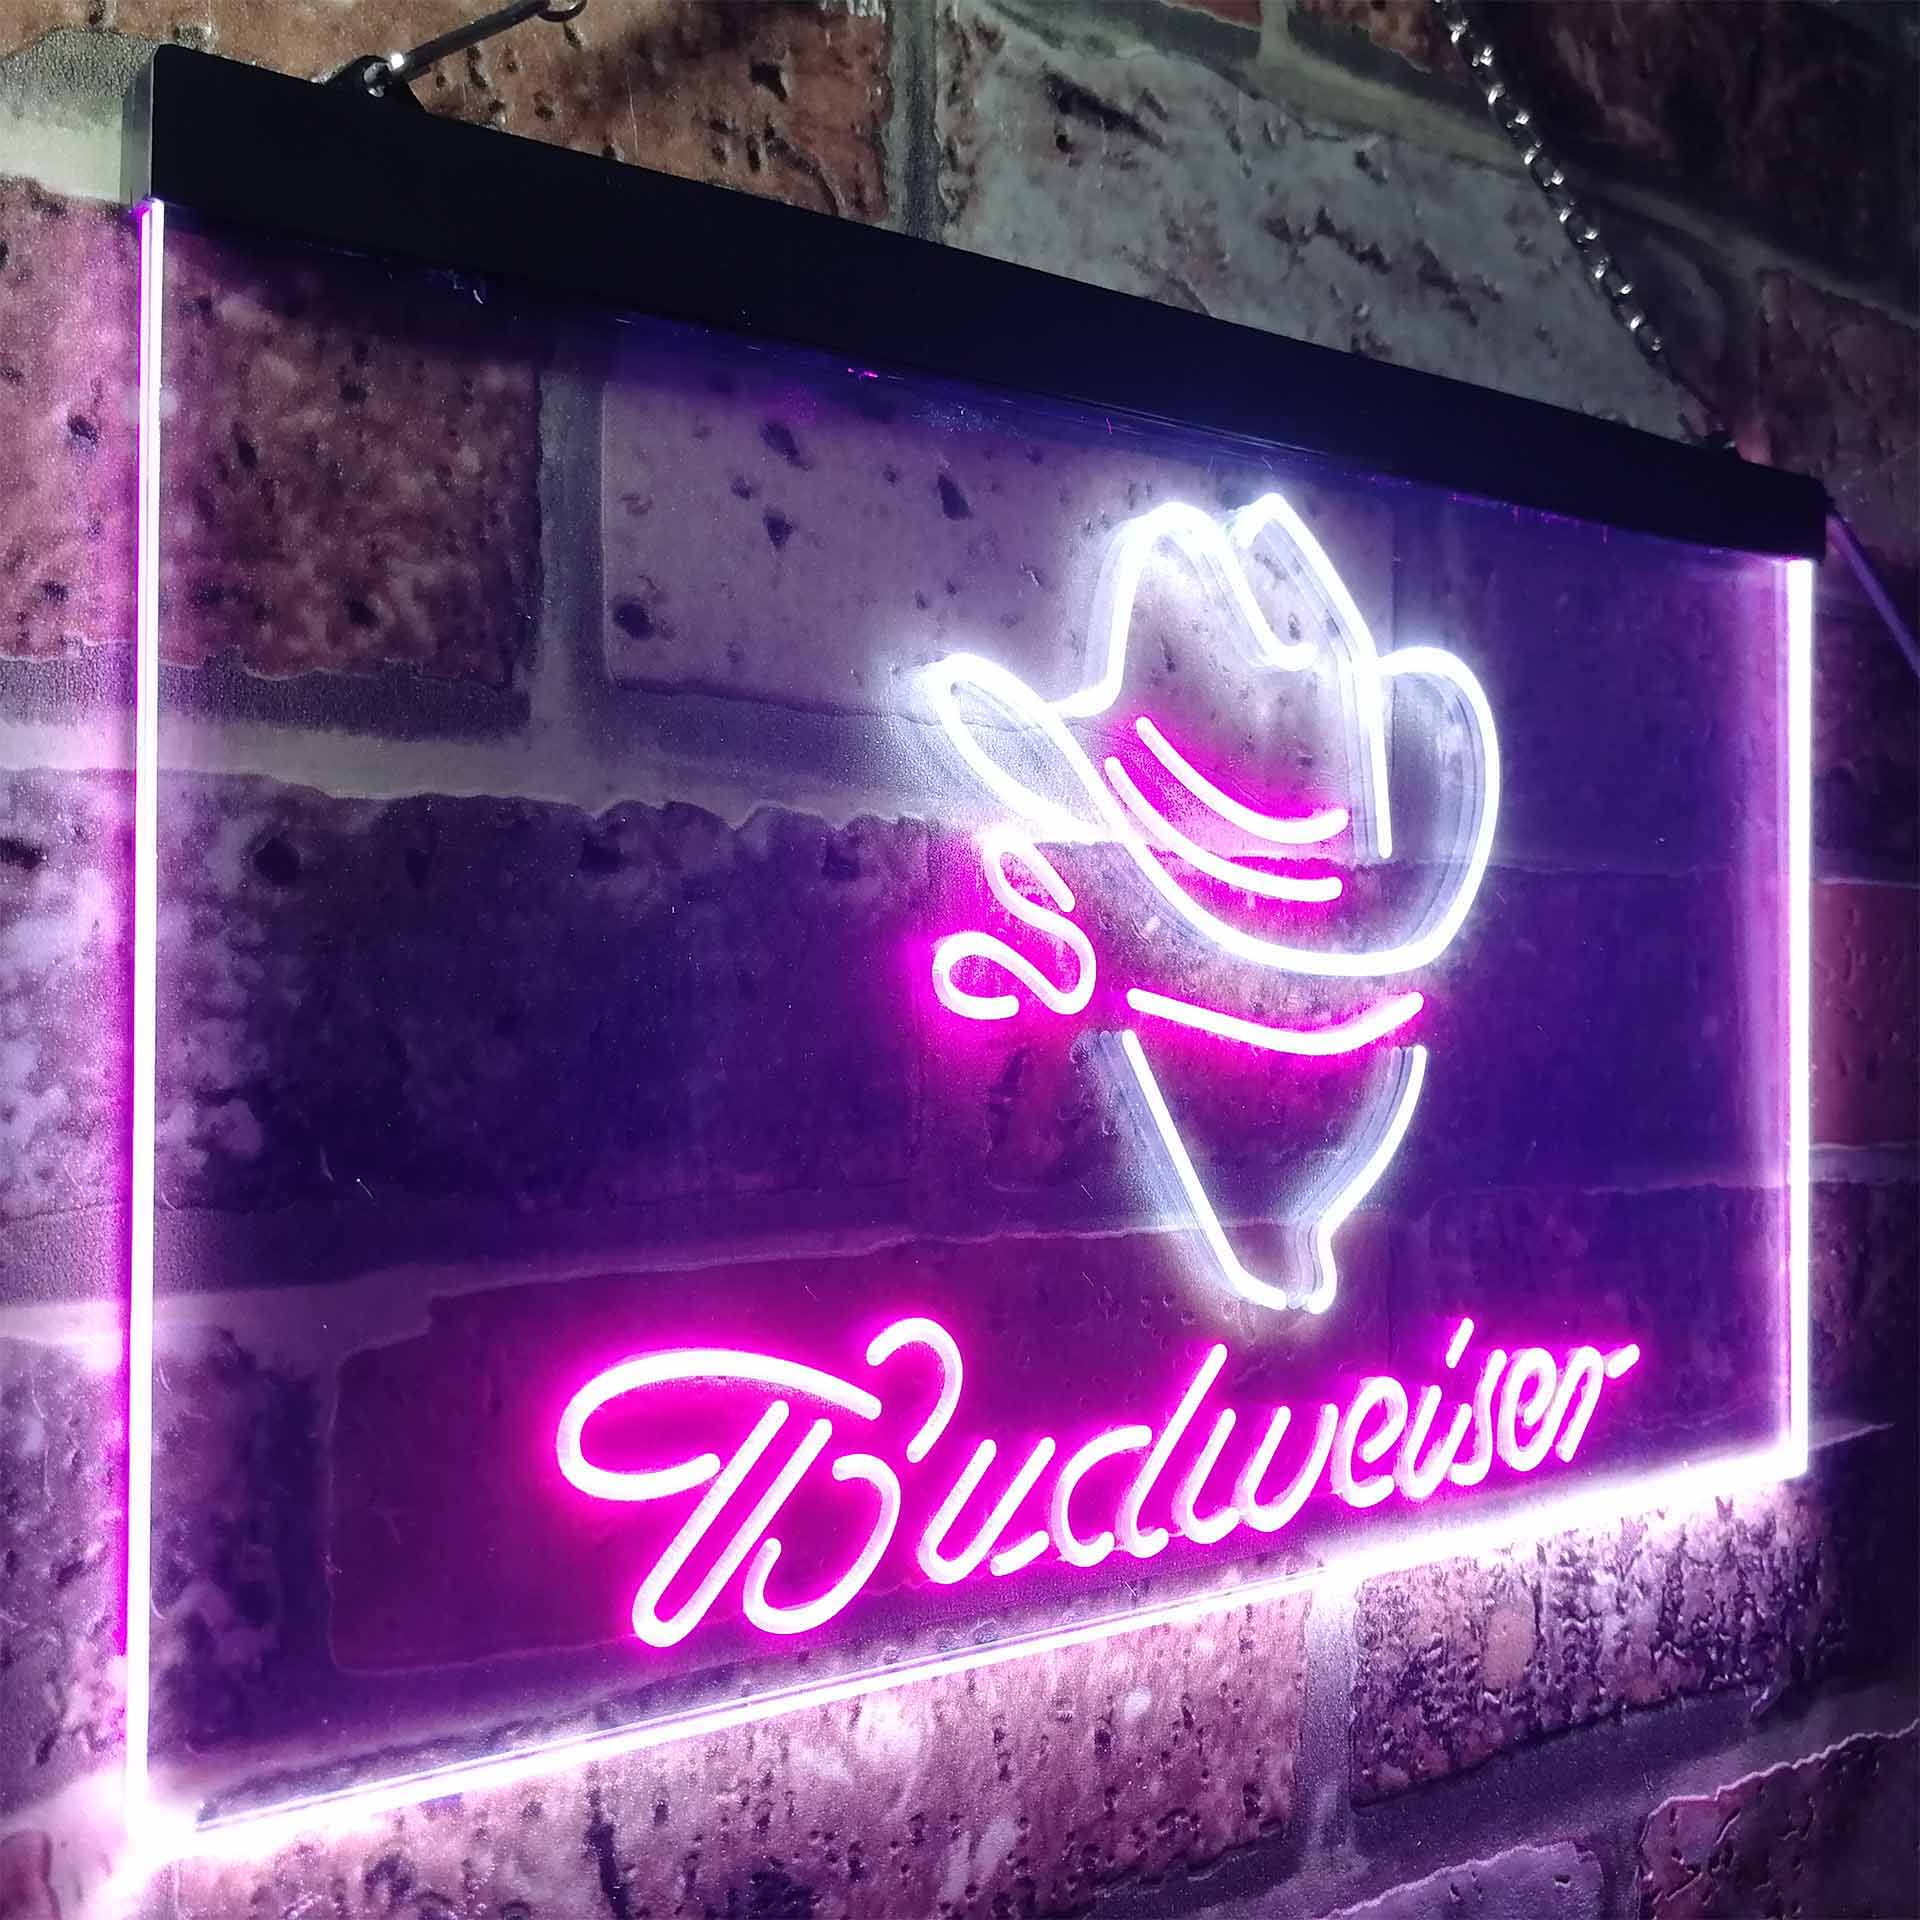 Budweiser Cowboy Neon LED Sign